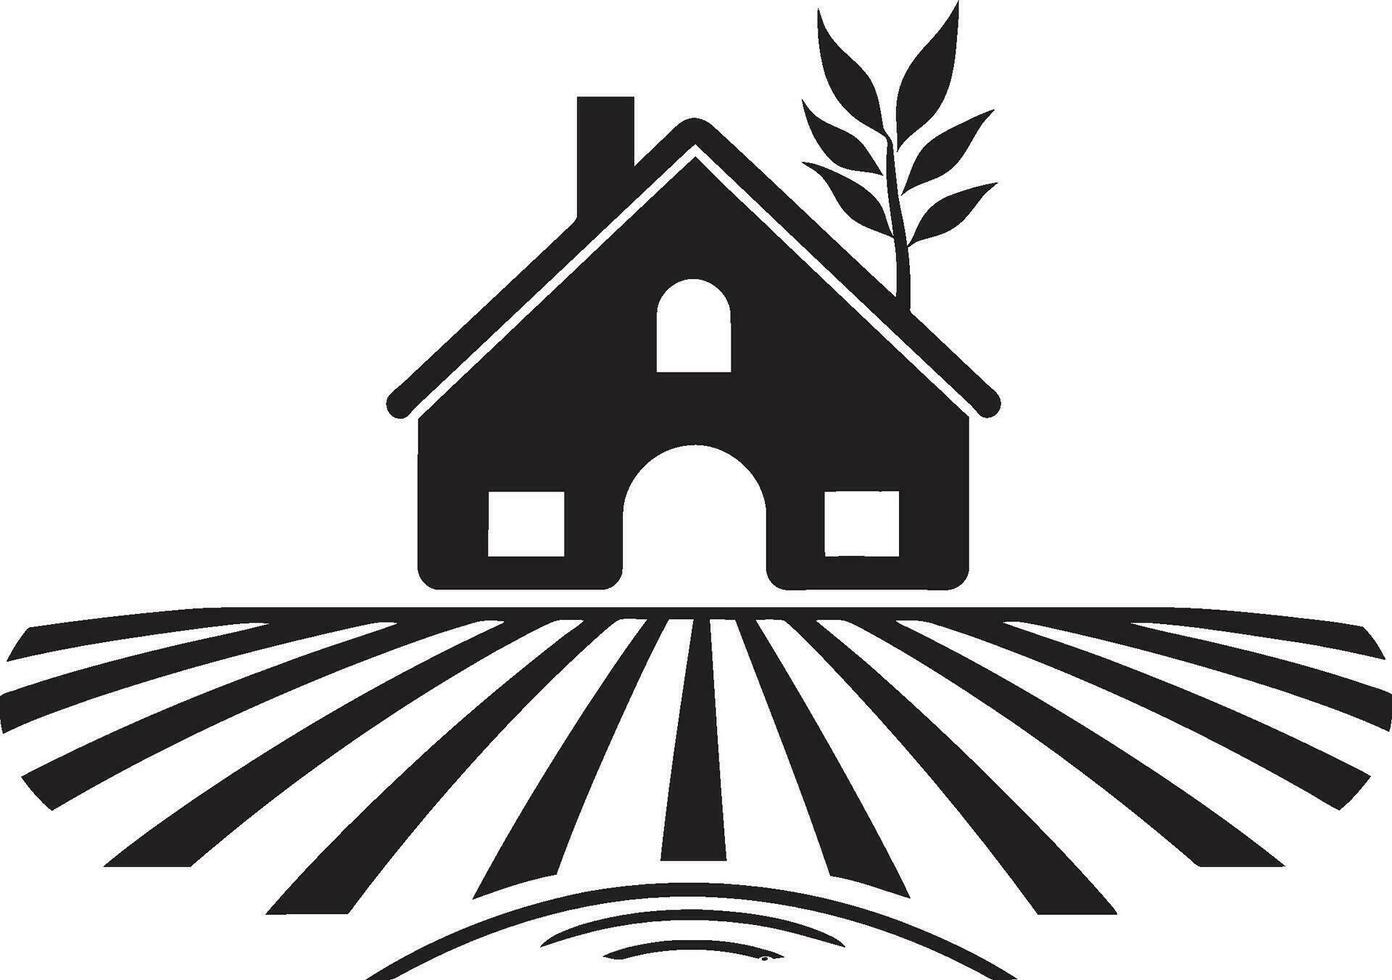 agricoltori porto icona agricoltori agriturismo vettore emblema agraria ritiro simbolo agriturismo design vettore icona